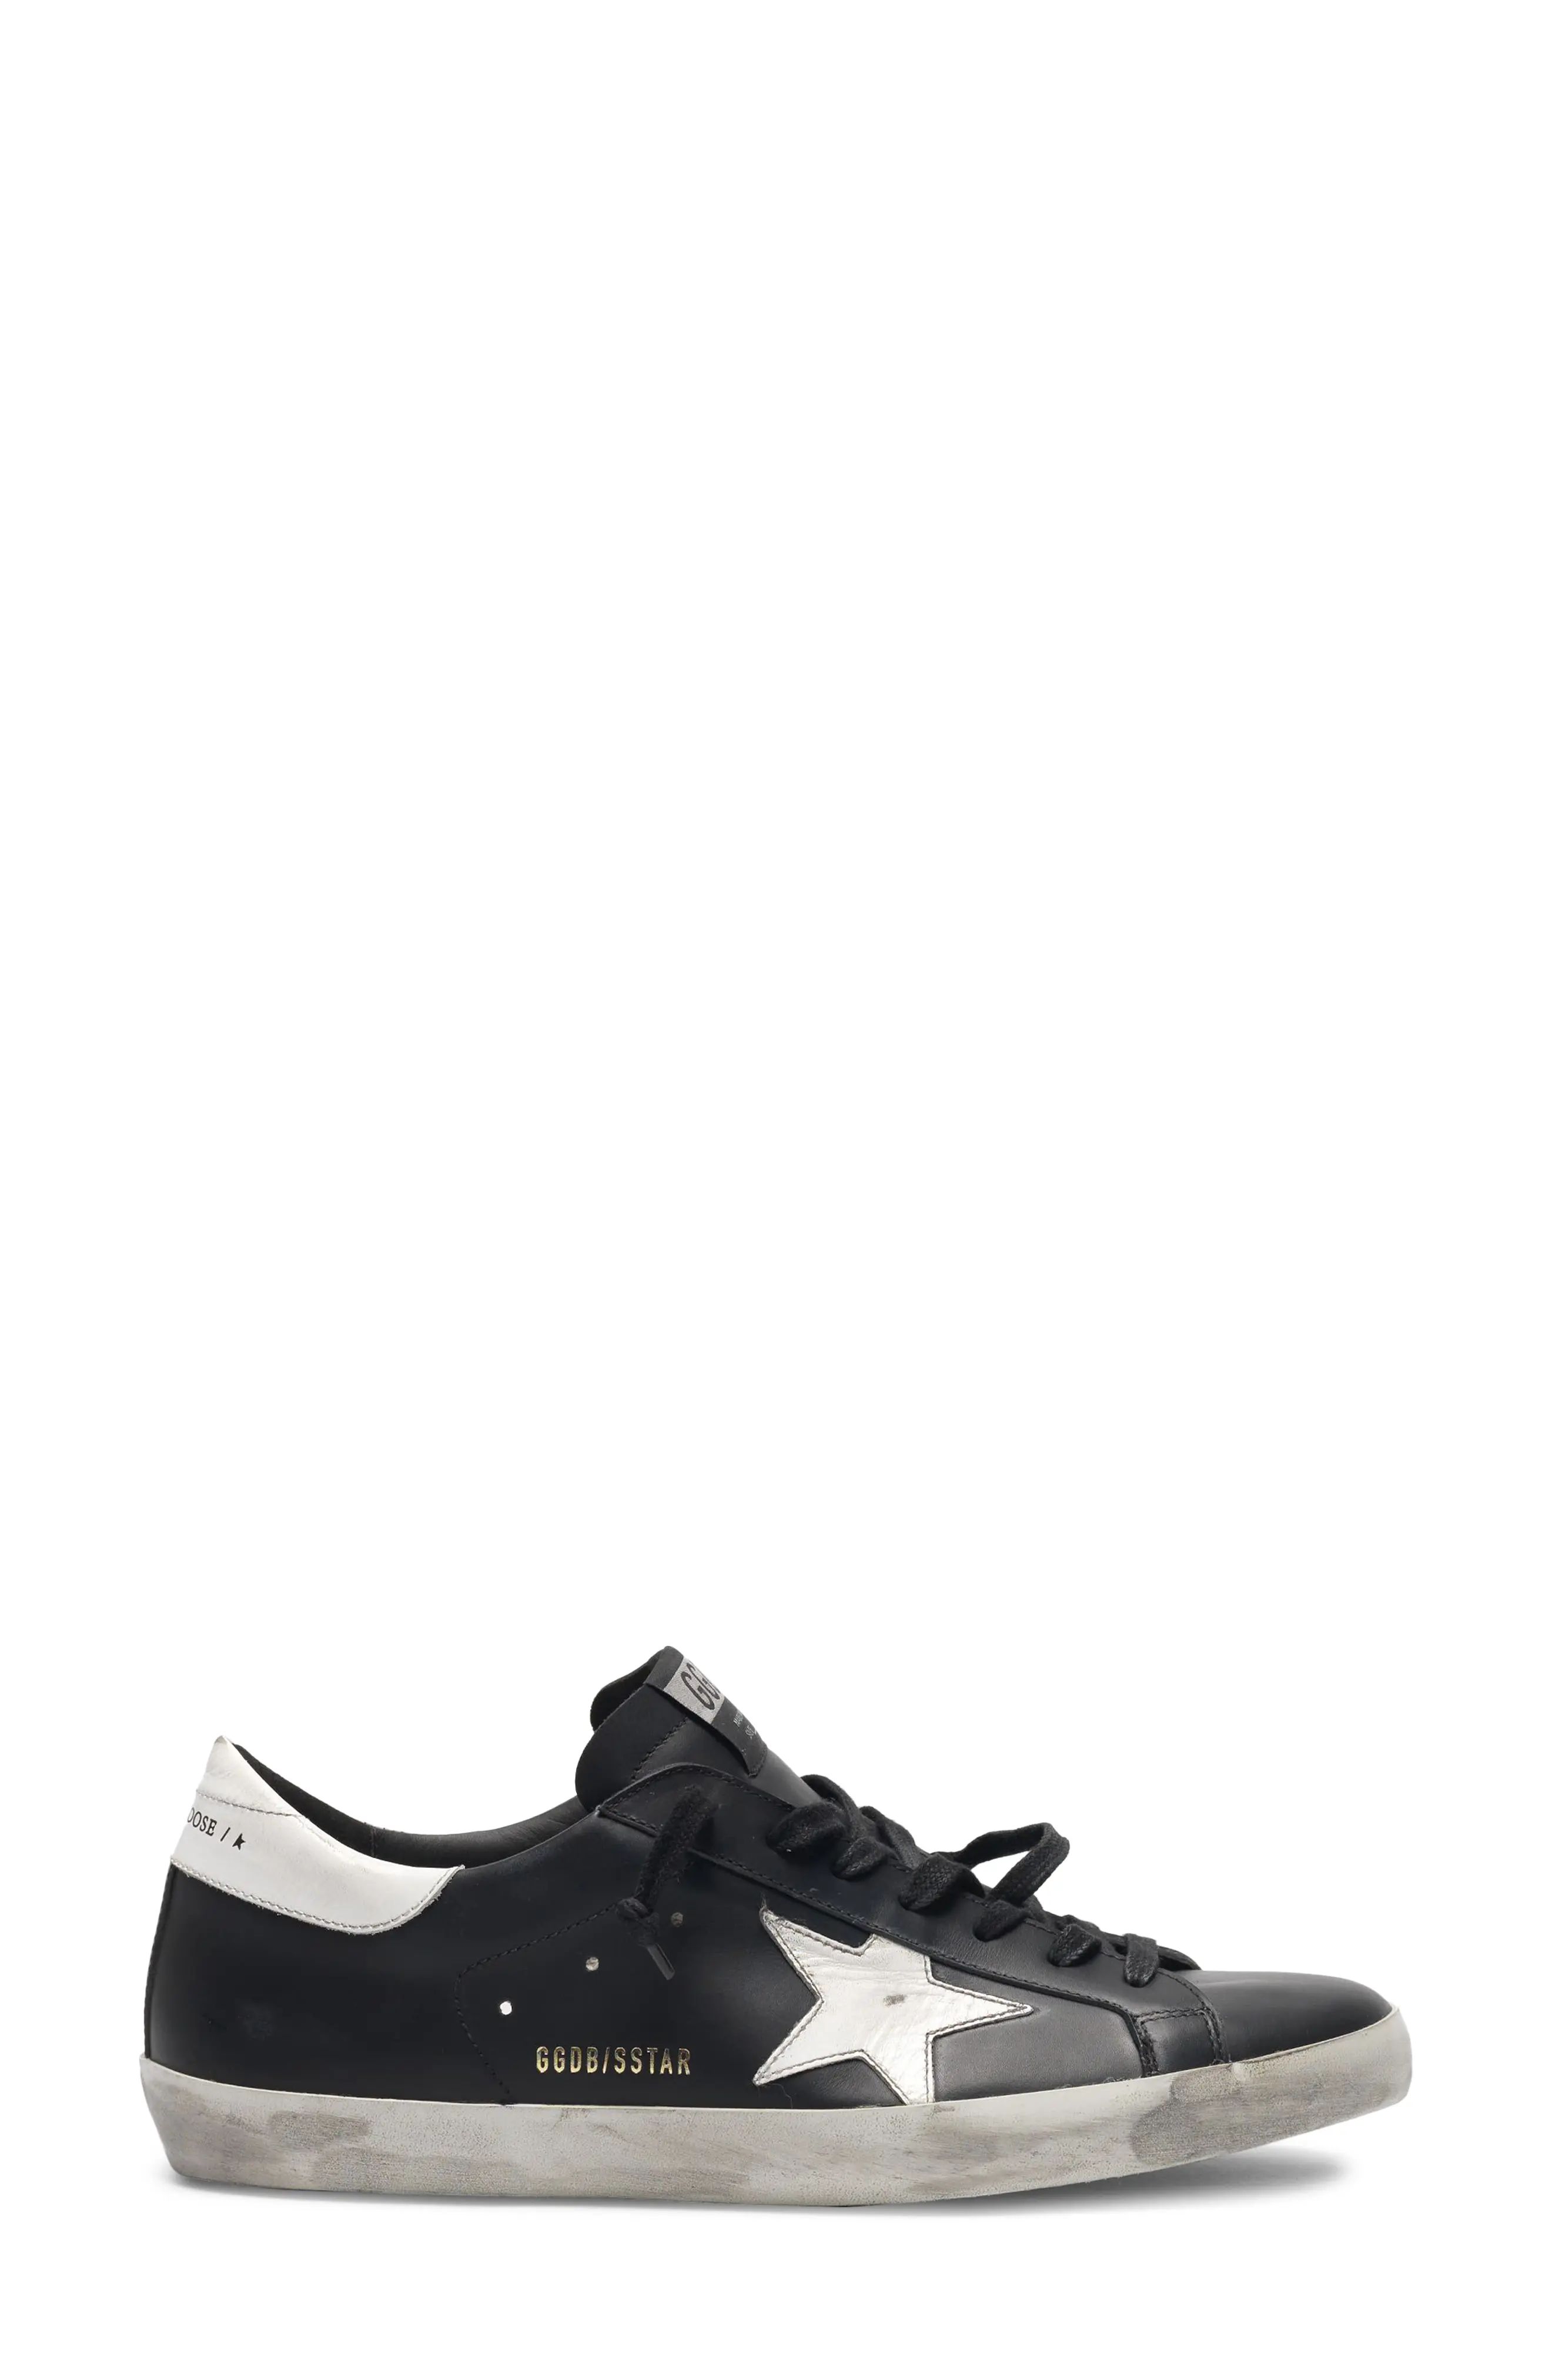 Golden Goose Super-Star Sneaker in Black/White at Nordstrom, Size 8Us | Nordstrom